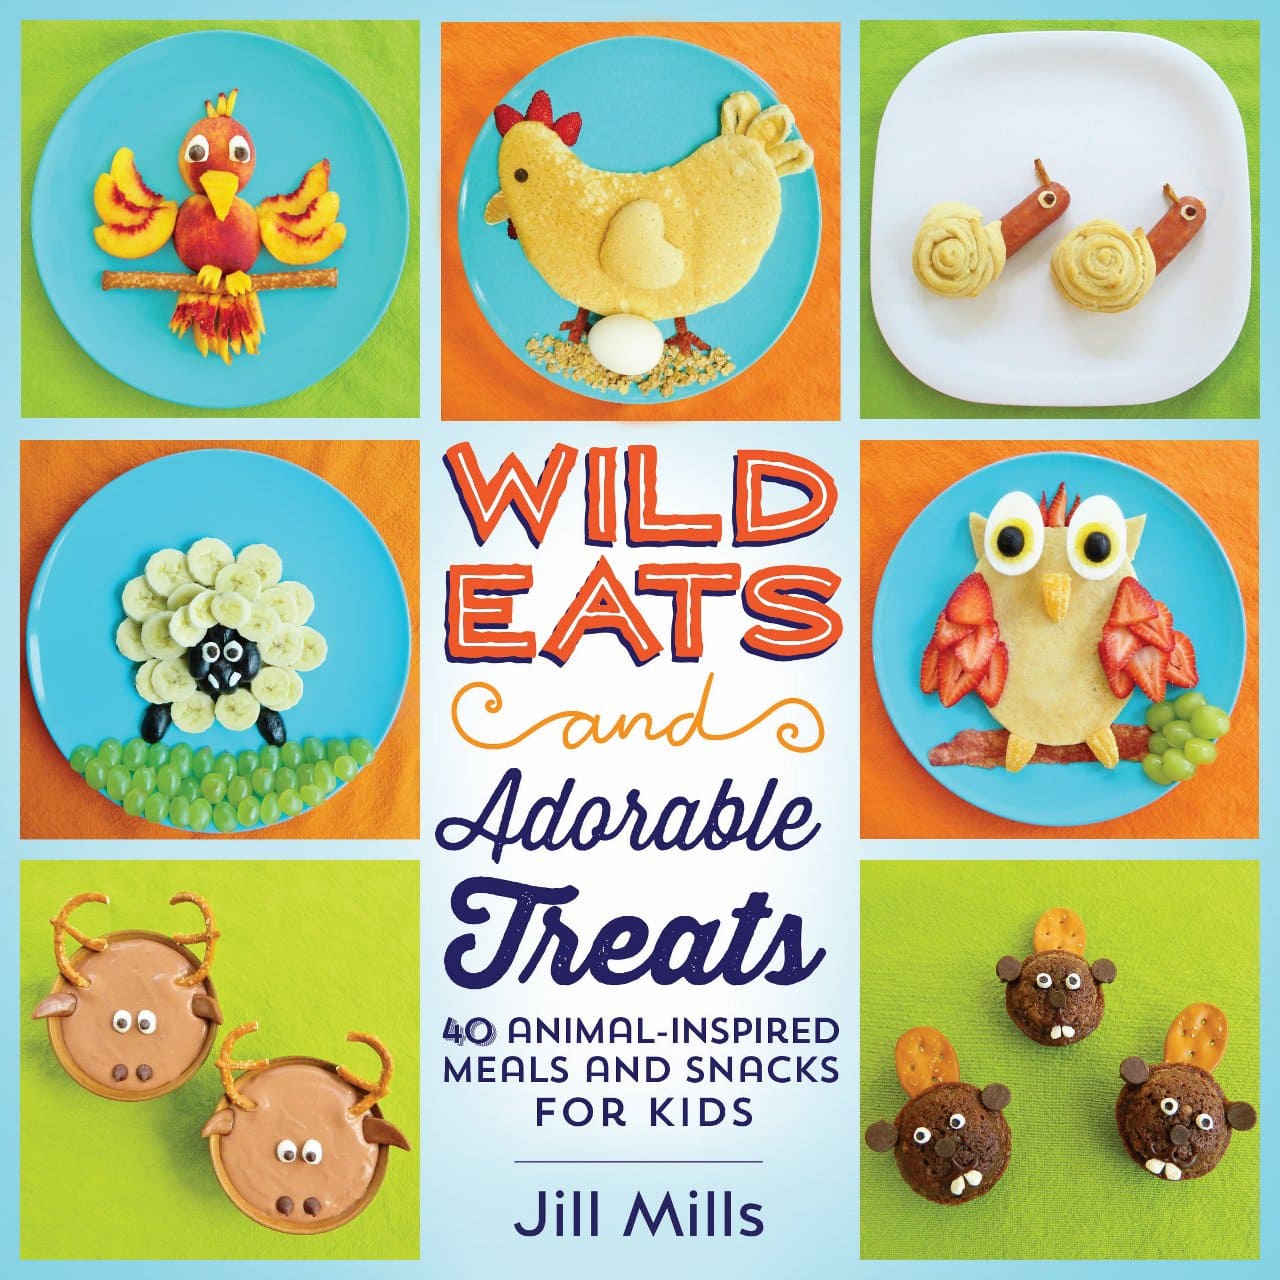 Wild Eats & Adorable Treats Cookbook for Kids!